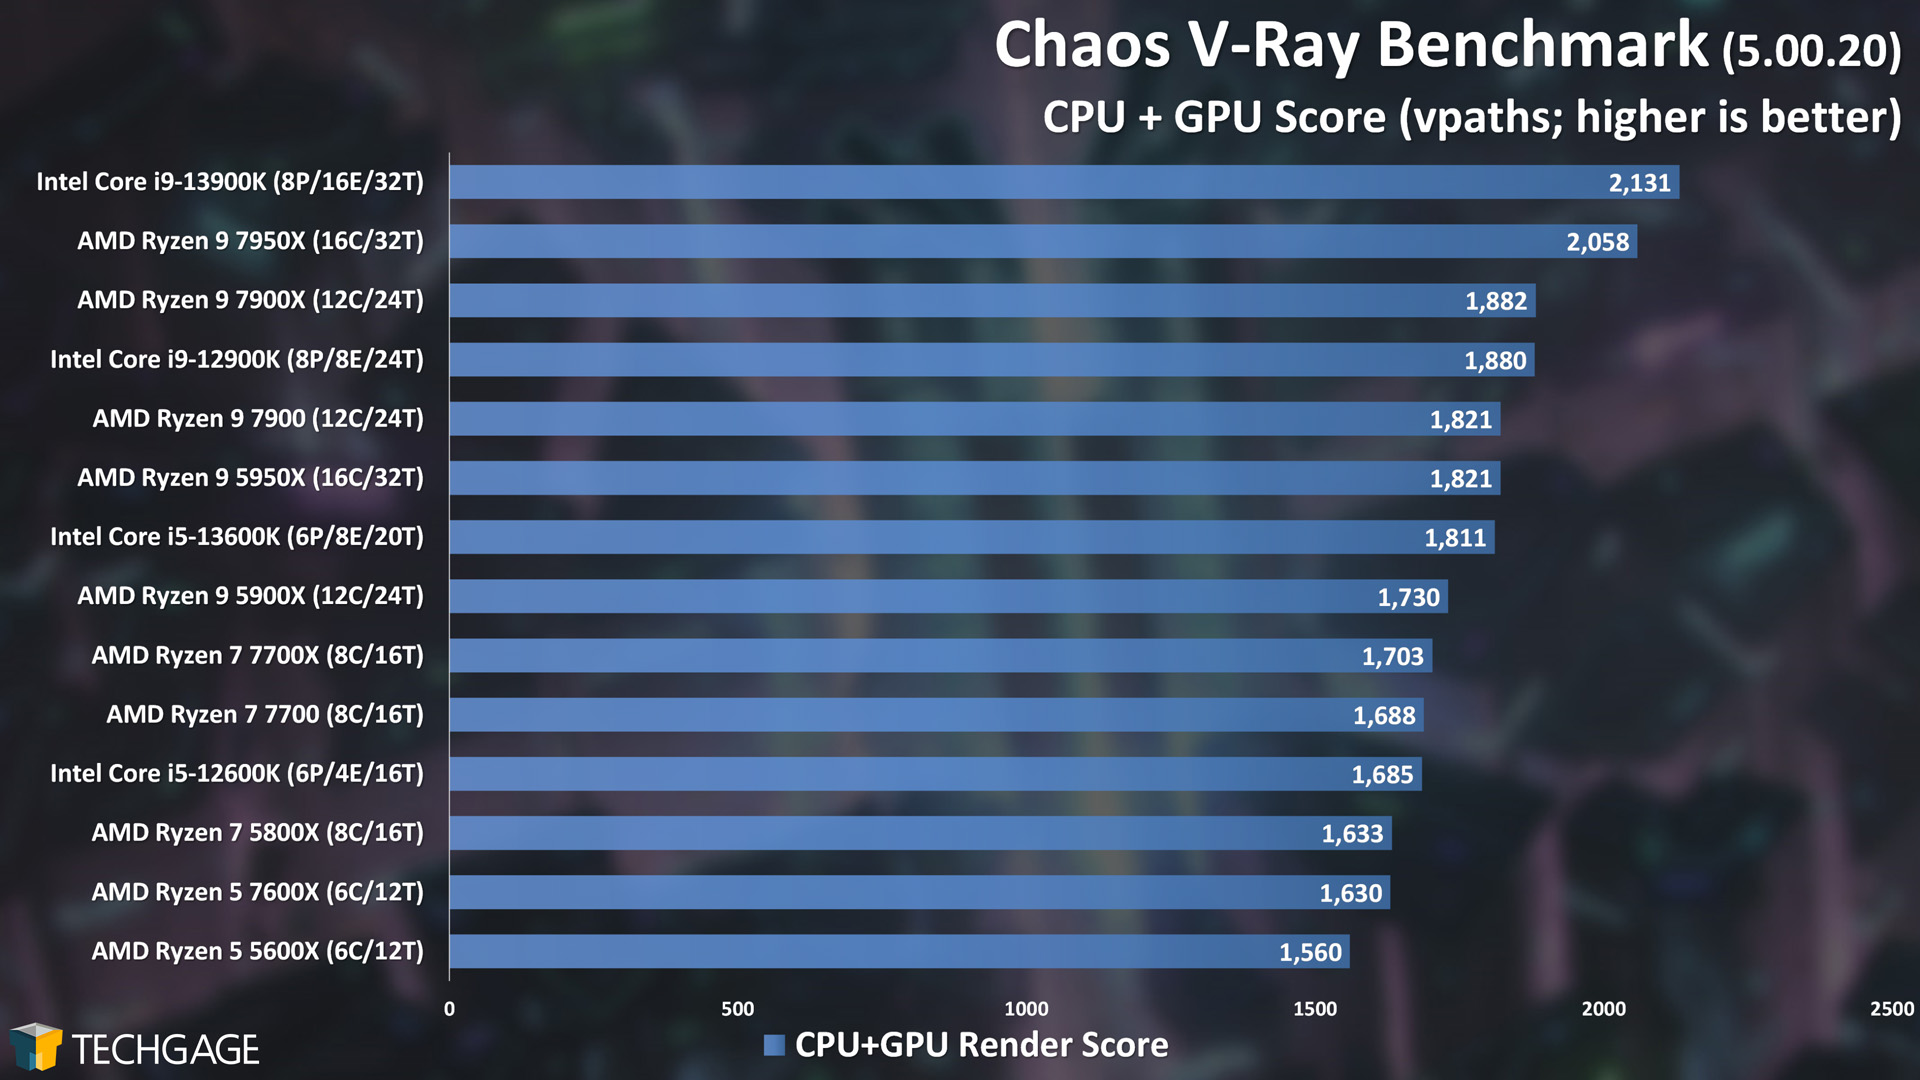 Chaos V-Ray Benchmark - CPU+GPU Rendering Score